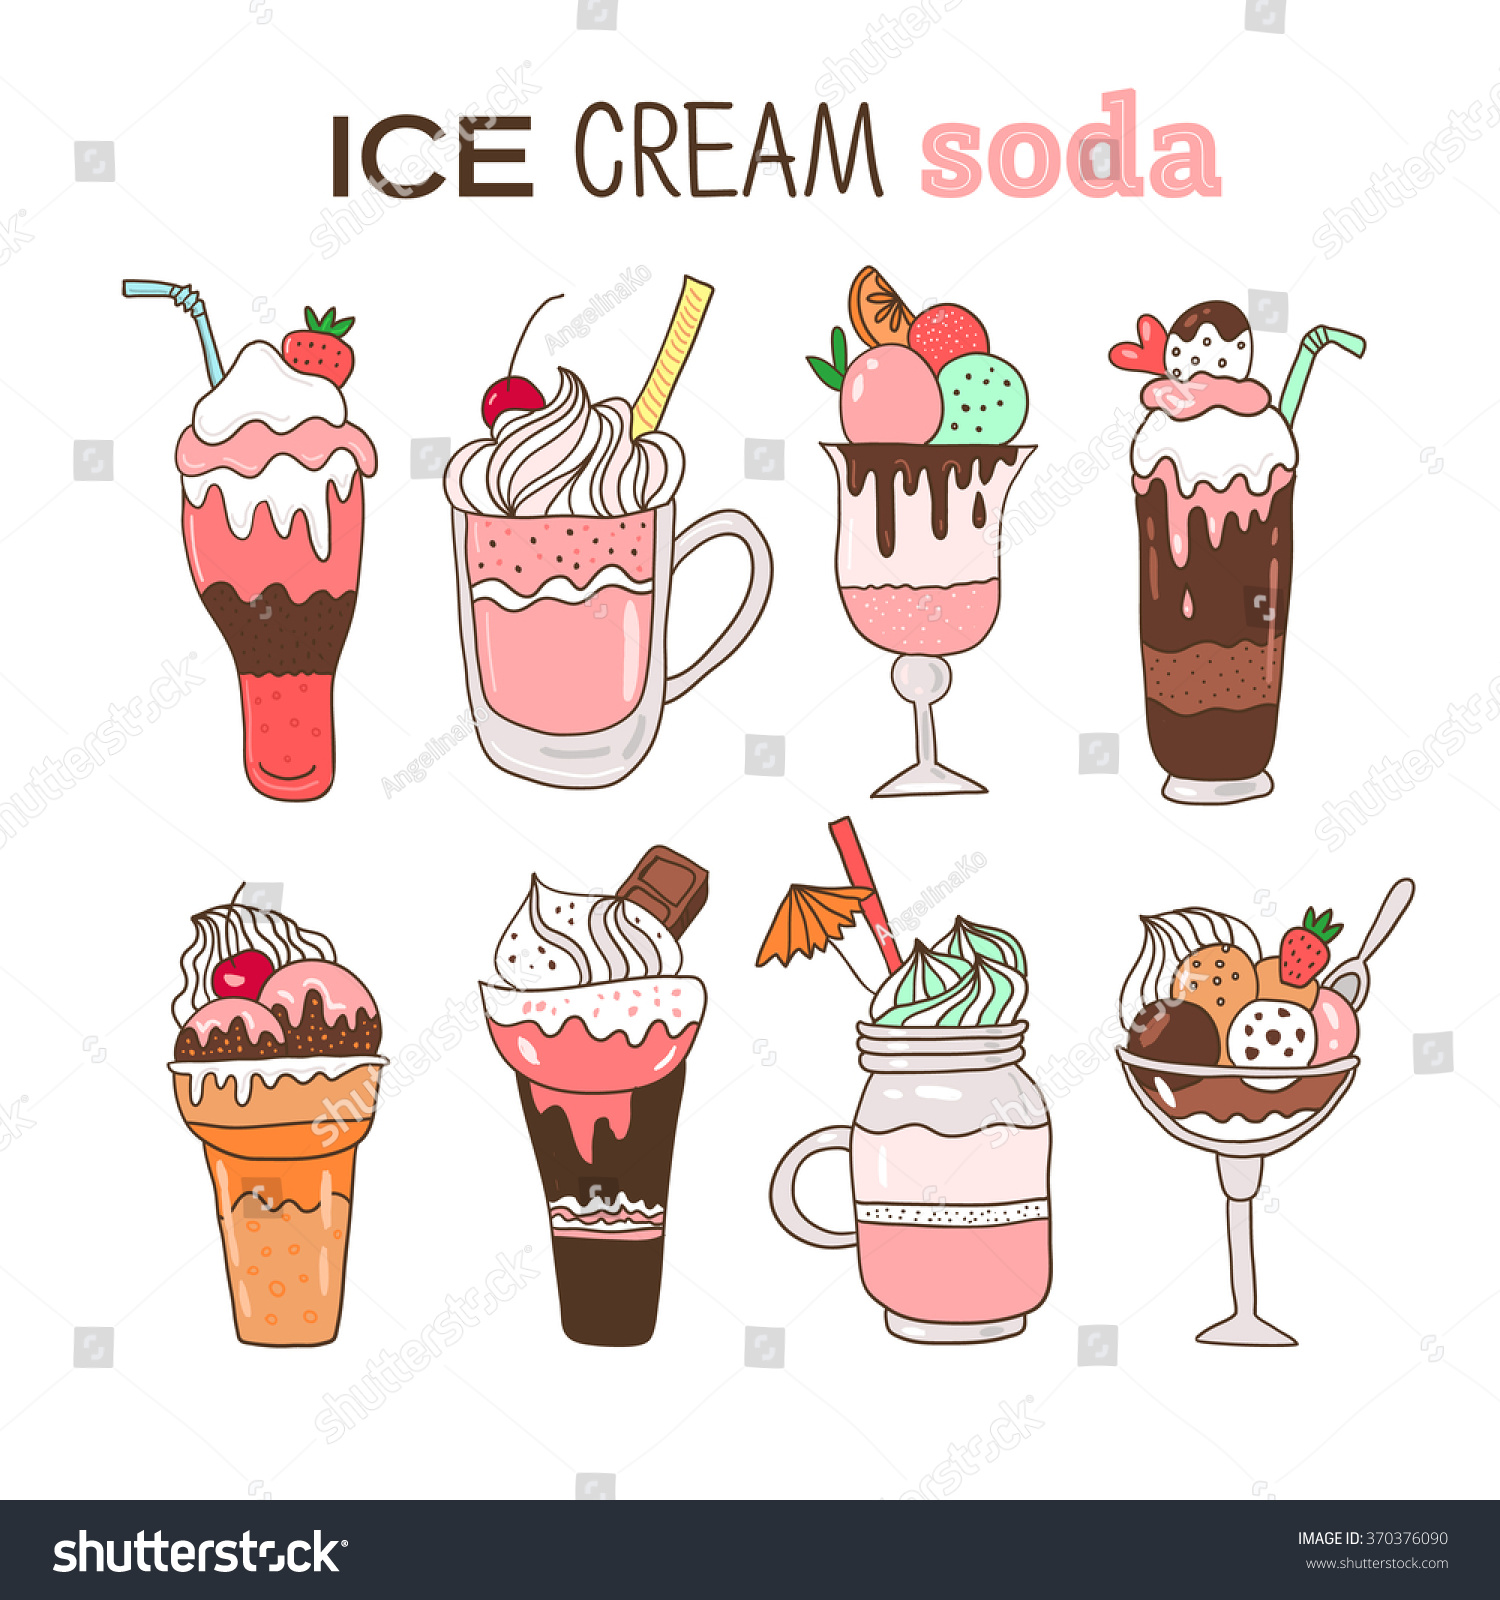 ice cream soda clipart free - photo #27